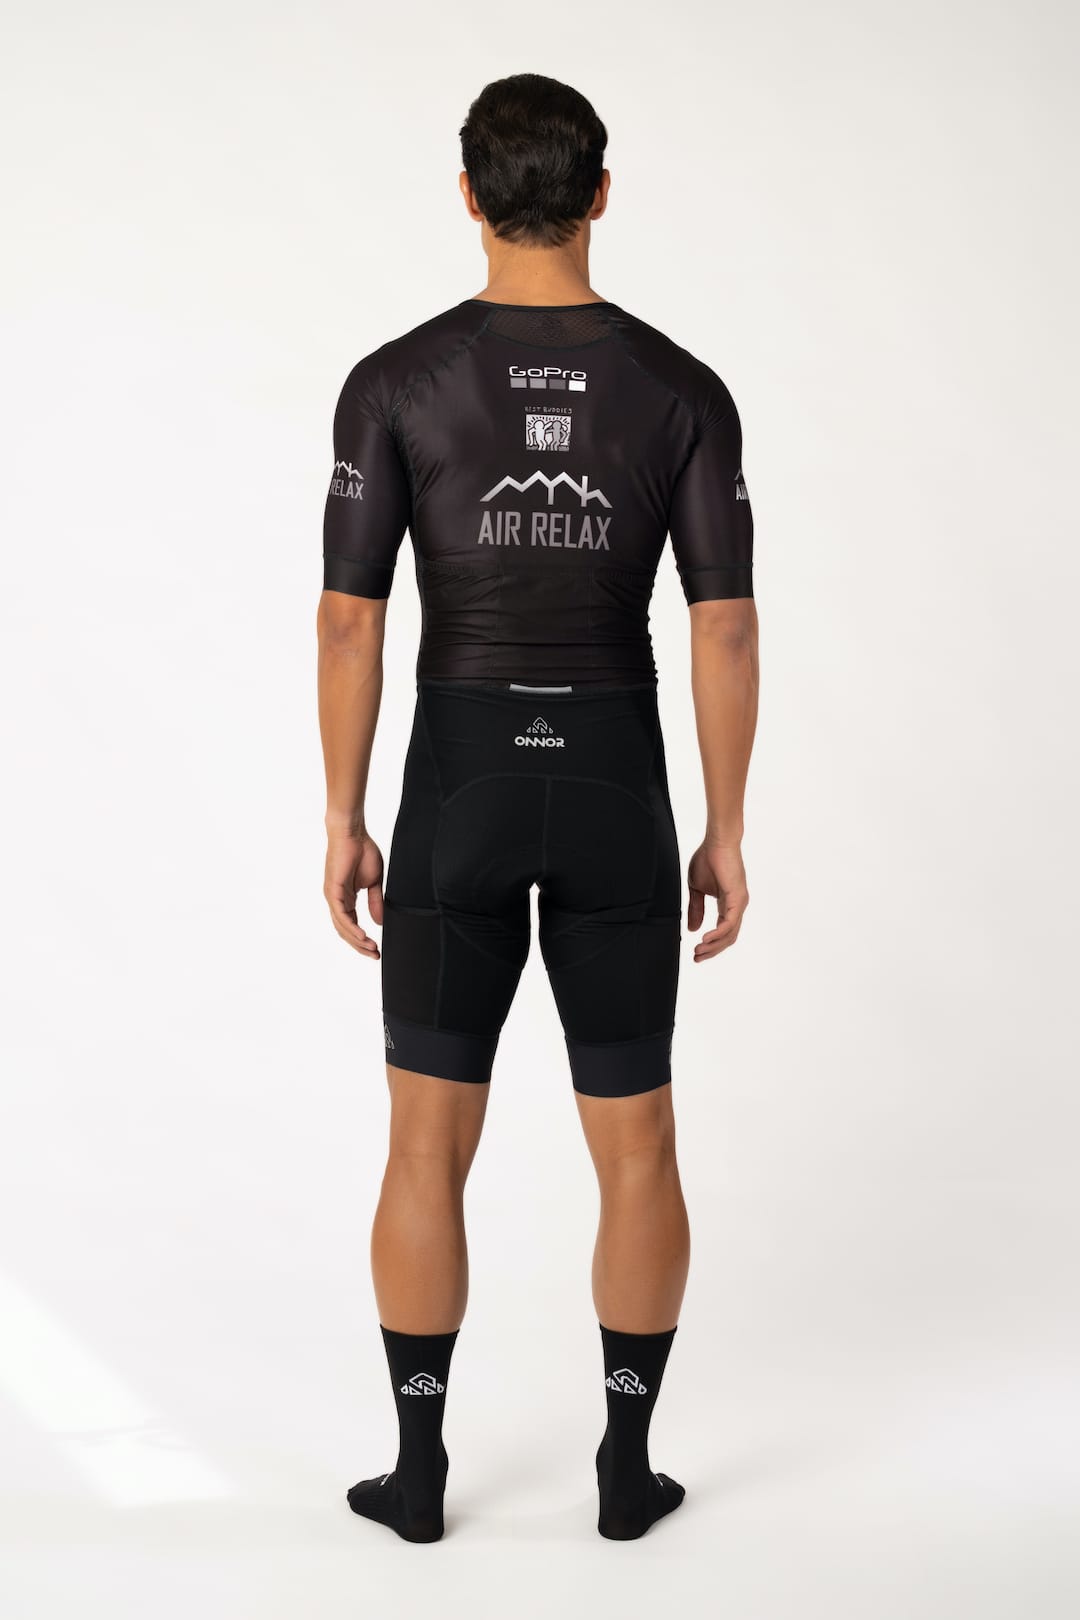 custom cycling jersey no minimum no minimum order